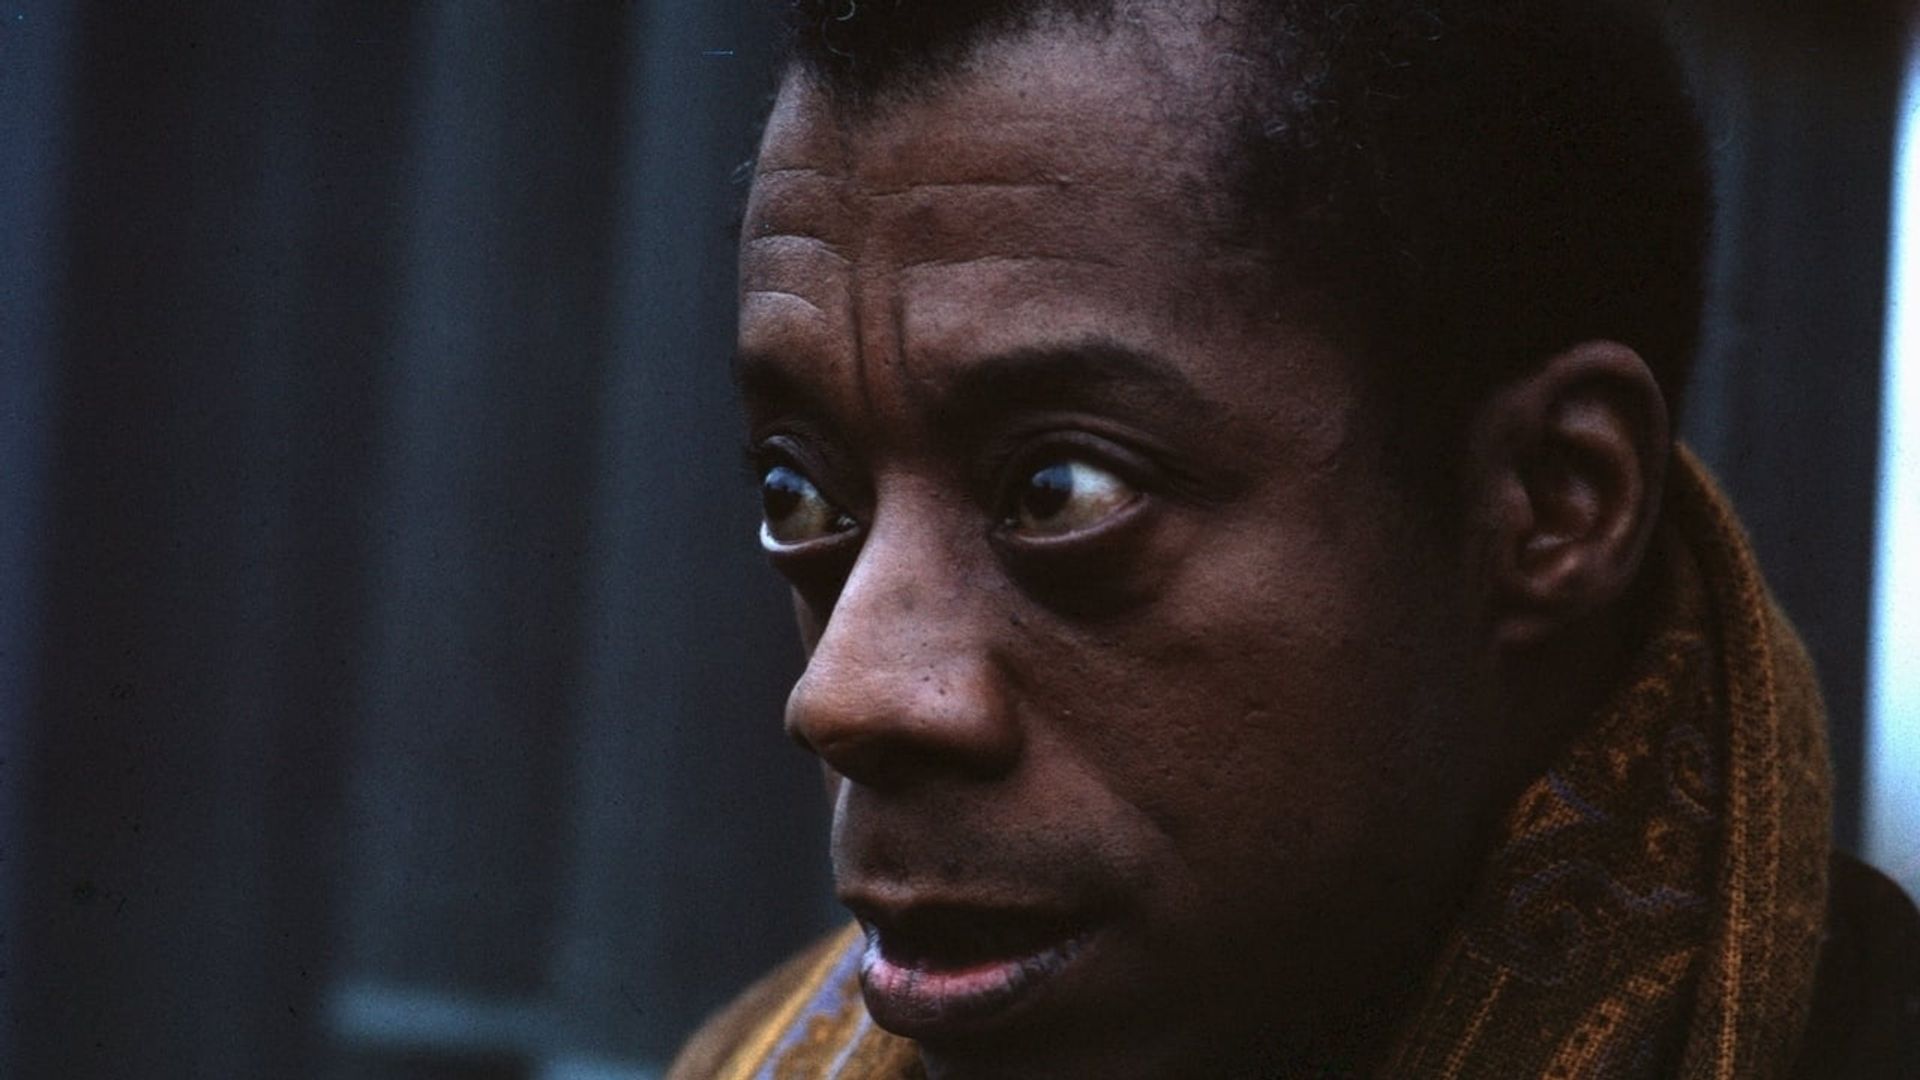 Meeting the Man: James Baldwin in Paris background